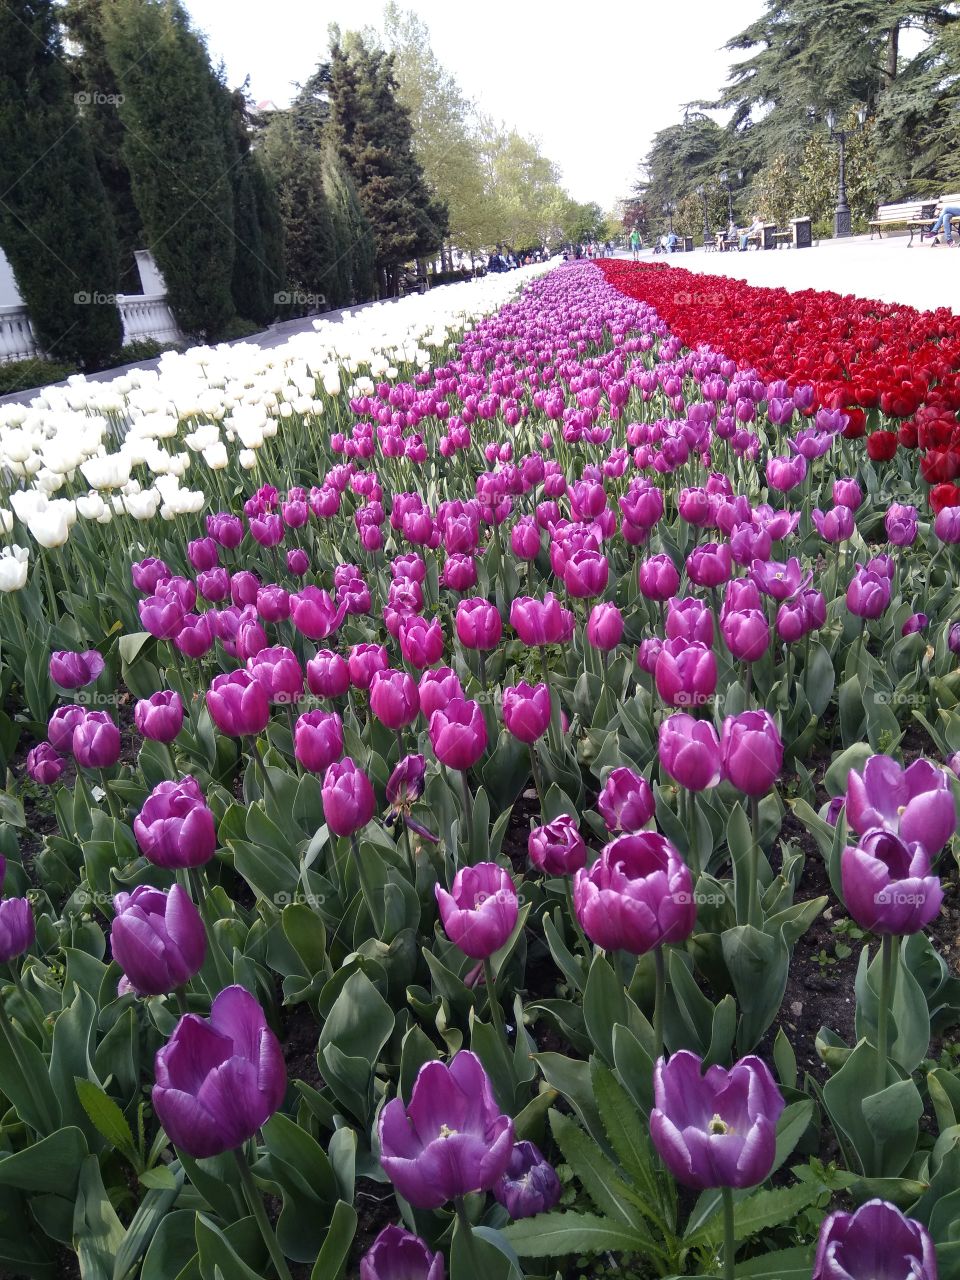 Тюльпаны весной на приморском бульваре Севастополя.
Tulips in the spring on the seaside boulevard of Sevastopol.